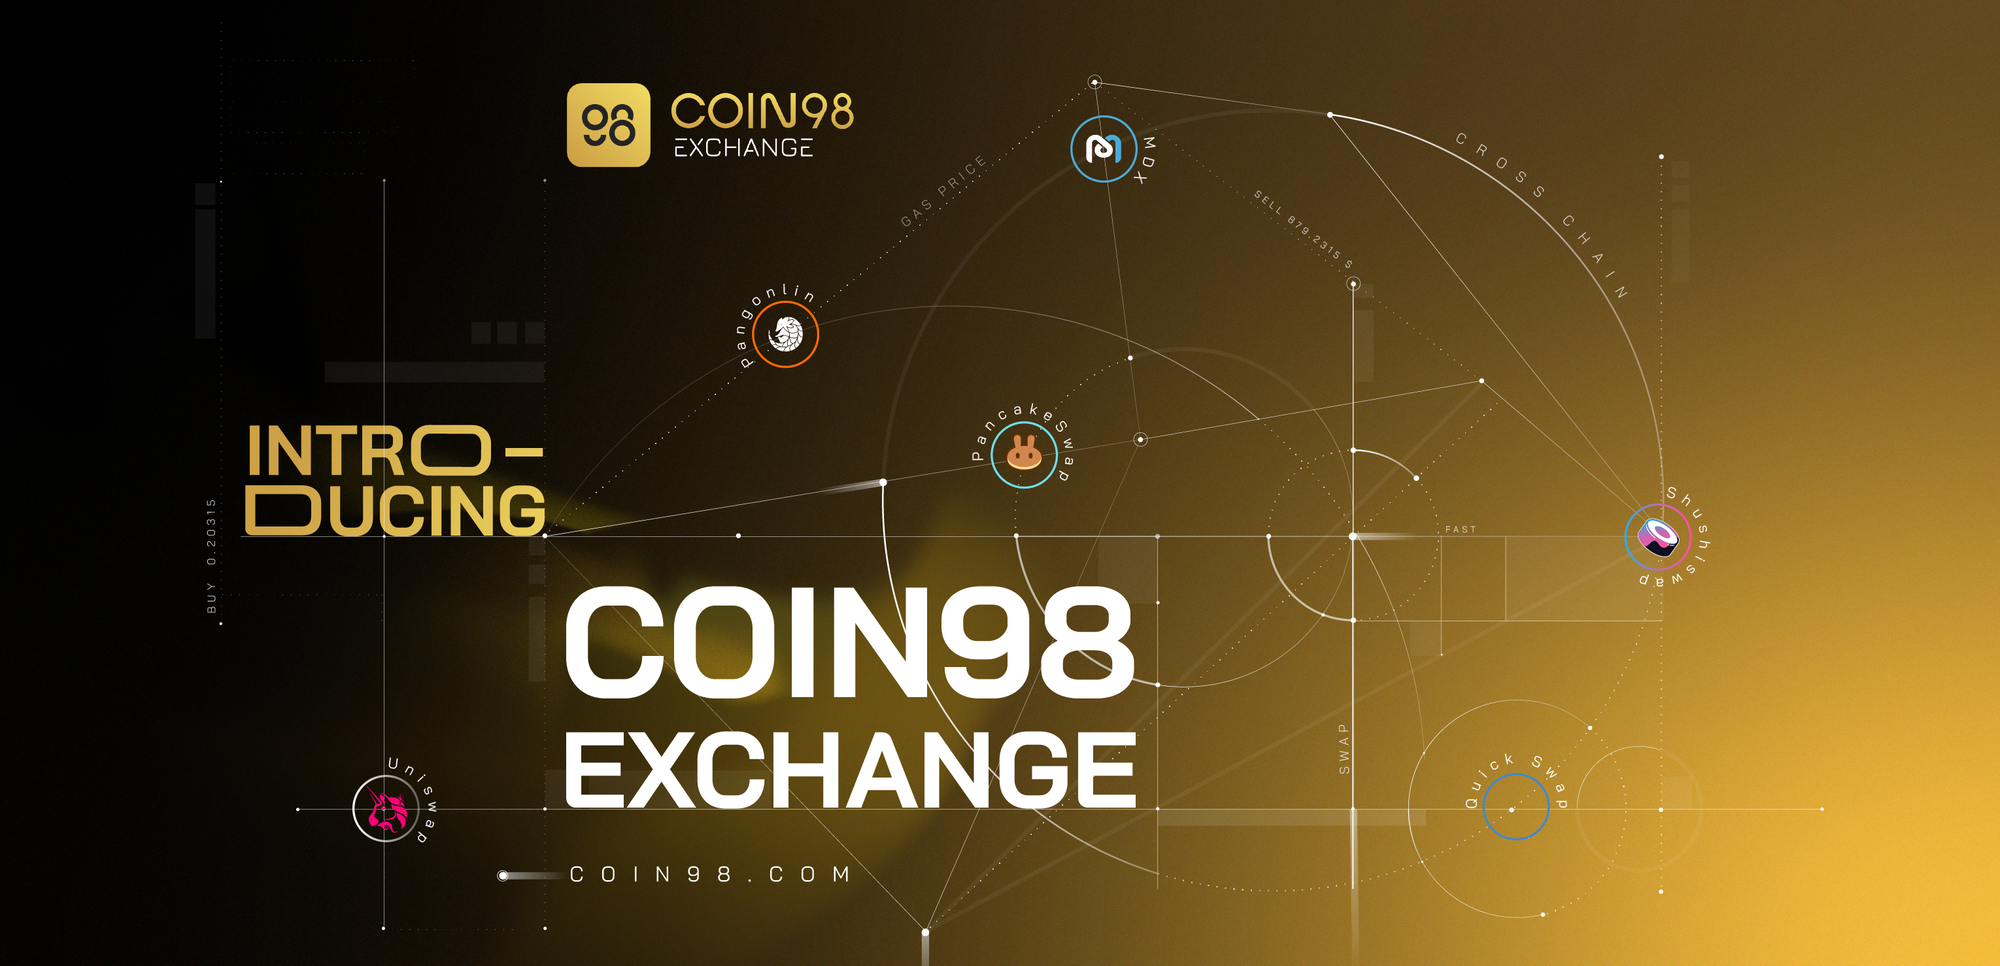 Coin98 Exchange: It's time to make the Multichain Future come alive!